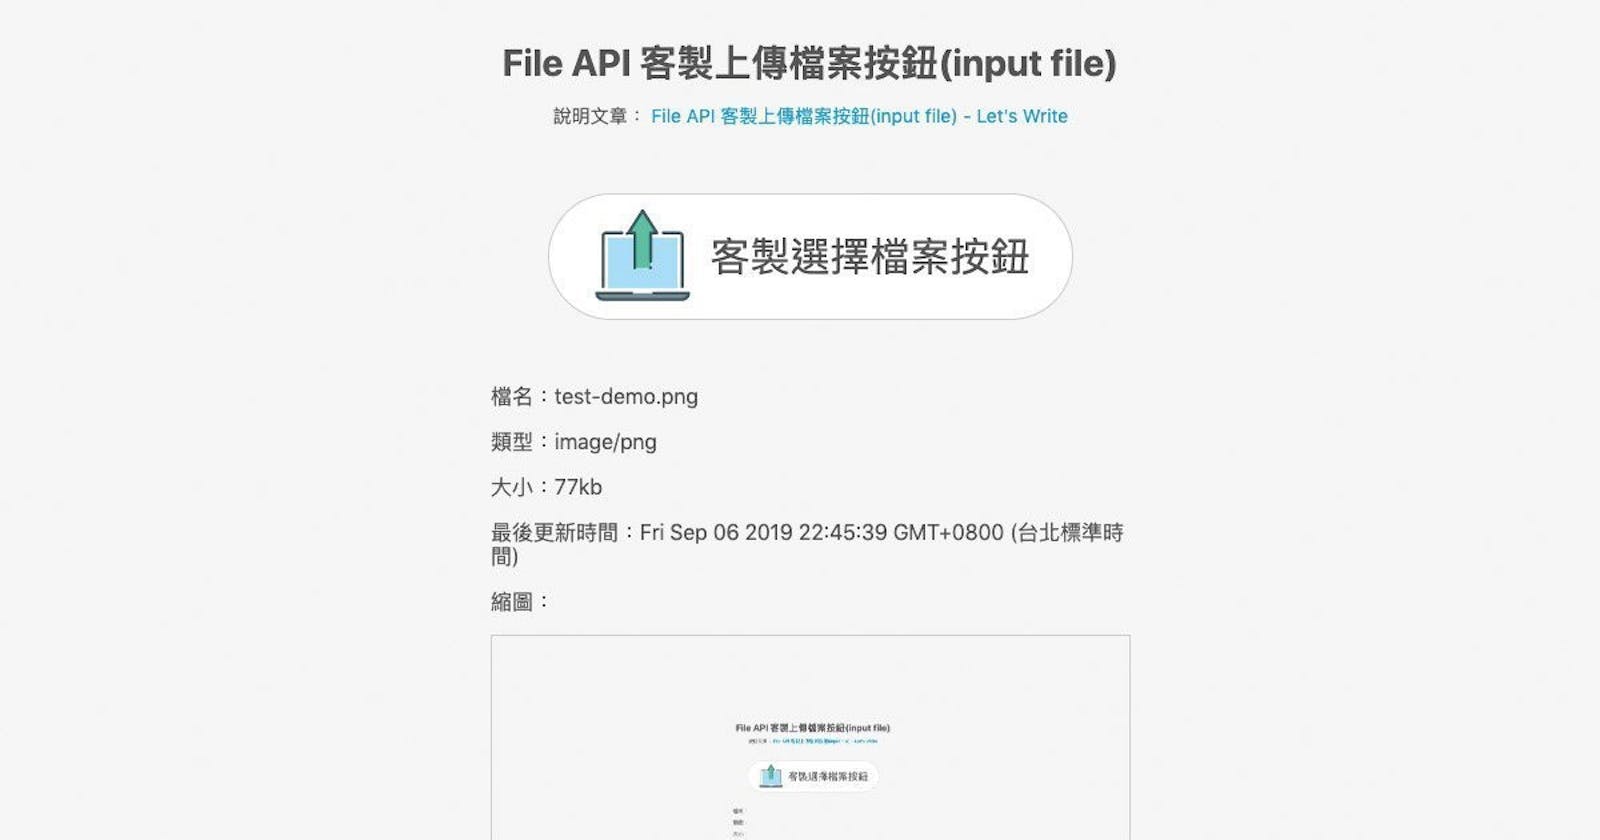 File API 客製上傳檔案按鈕 (input file)